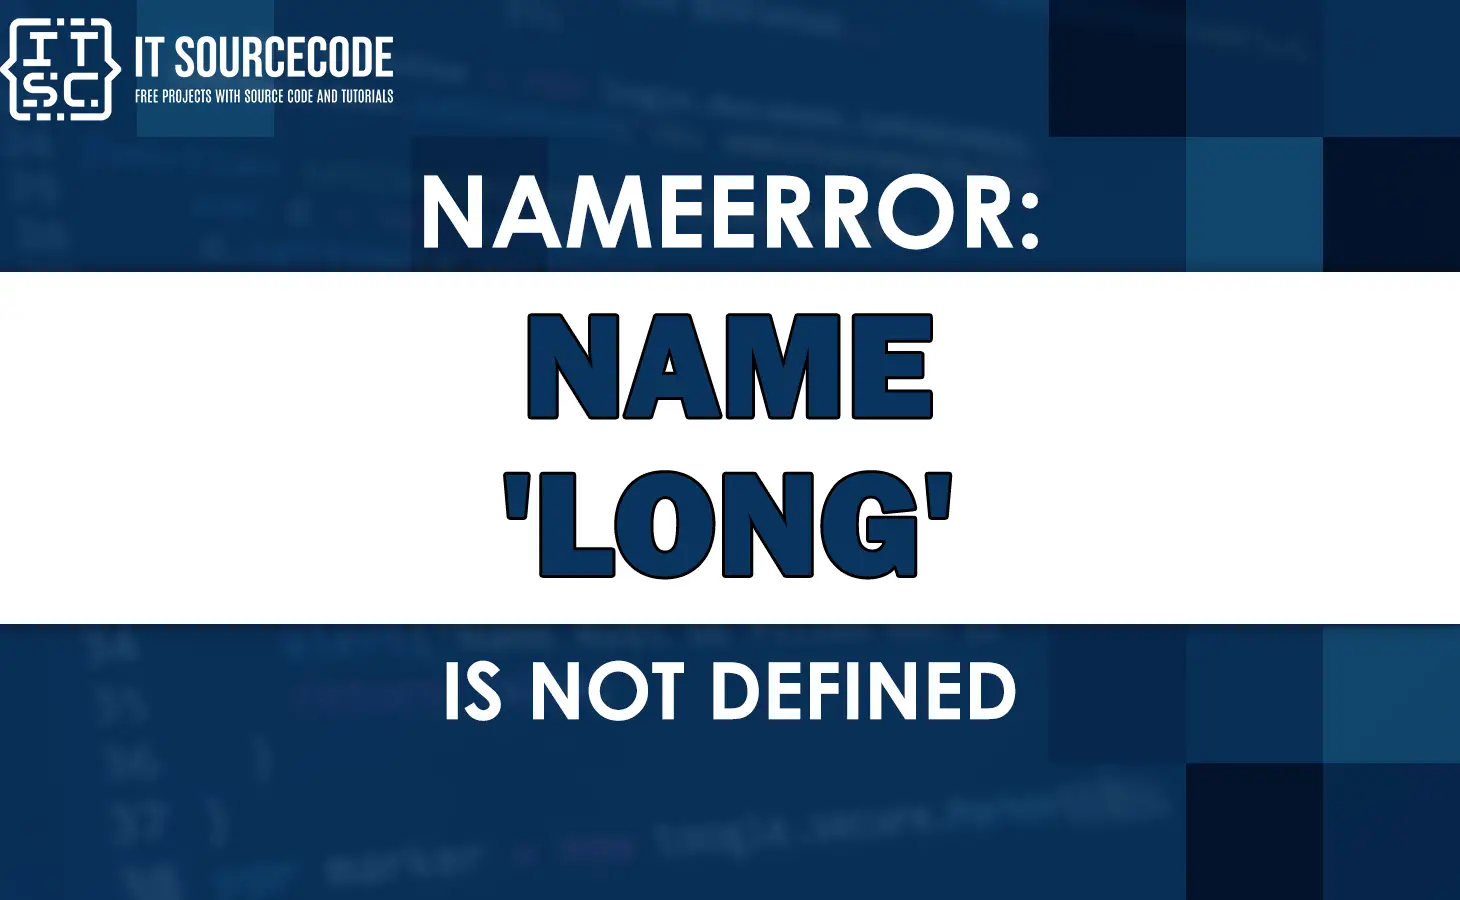 Nameerror: name long is not defined